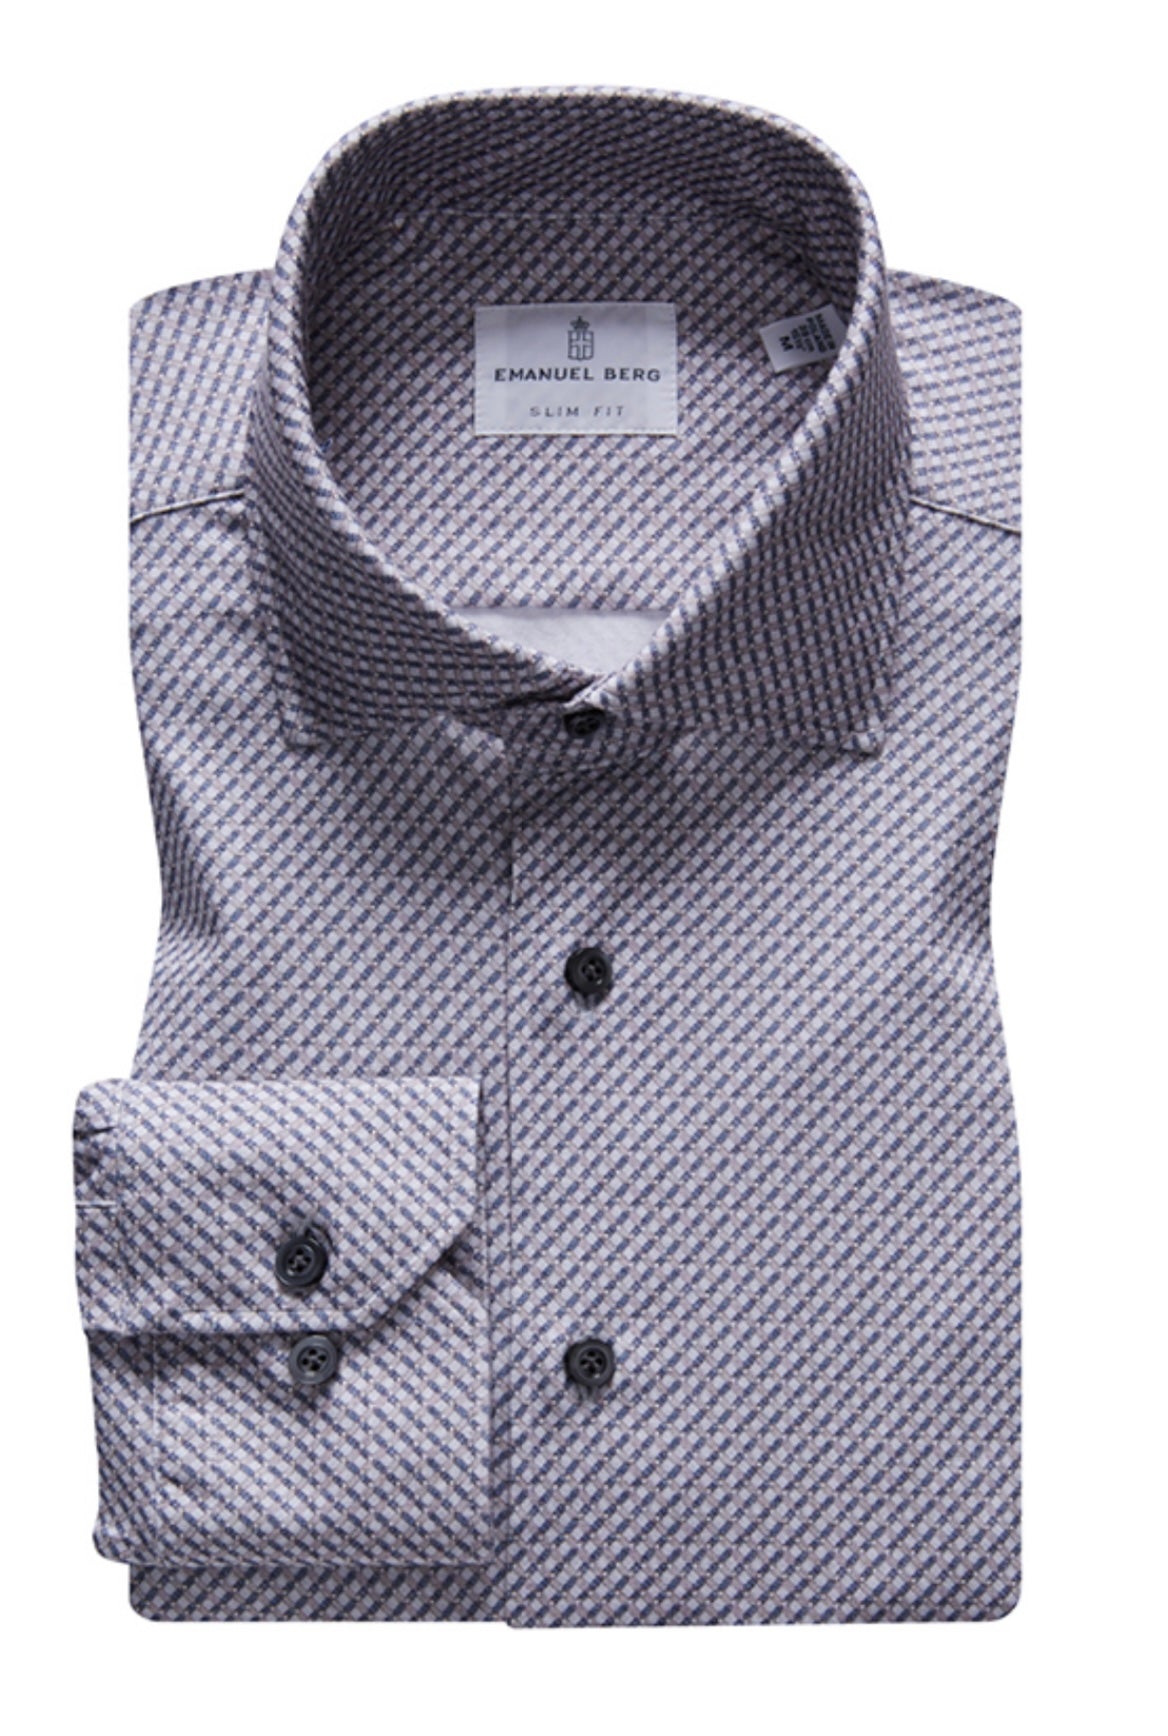 EMANUEL BERG 4Flex Shirt | Weave Med Grey